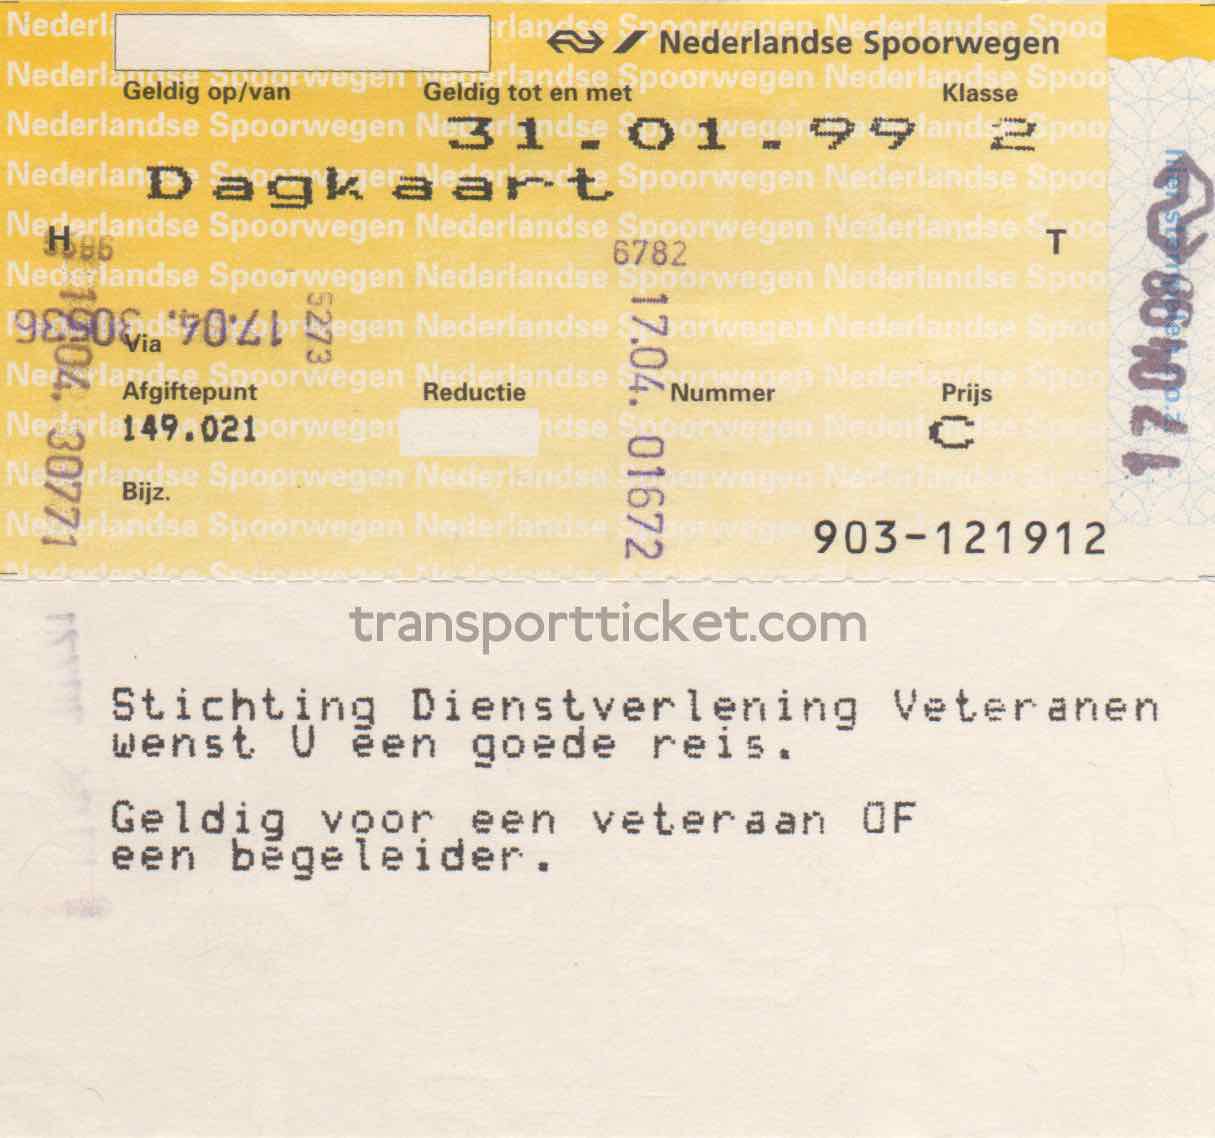 NS railway ticket for a veteran (1998)